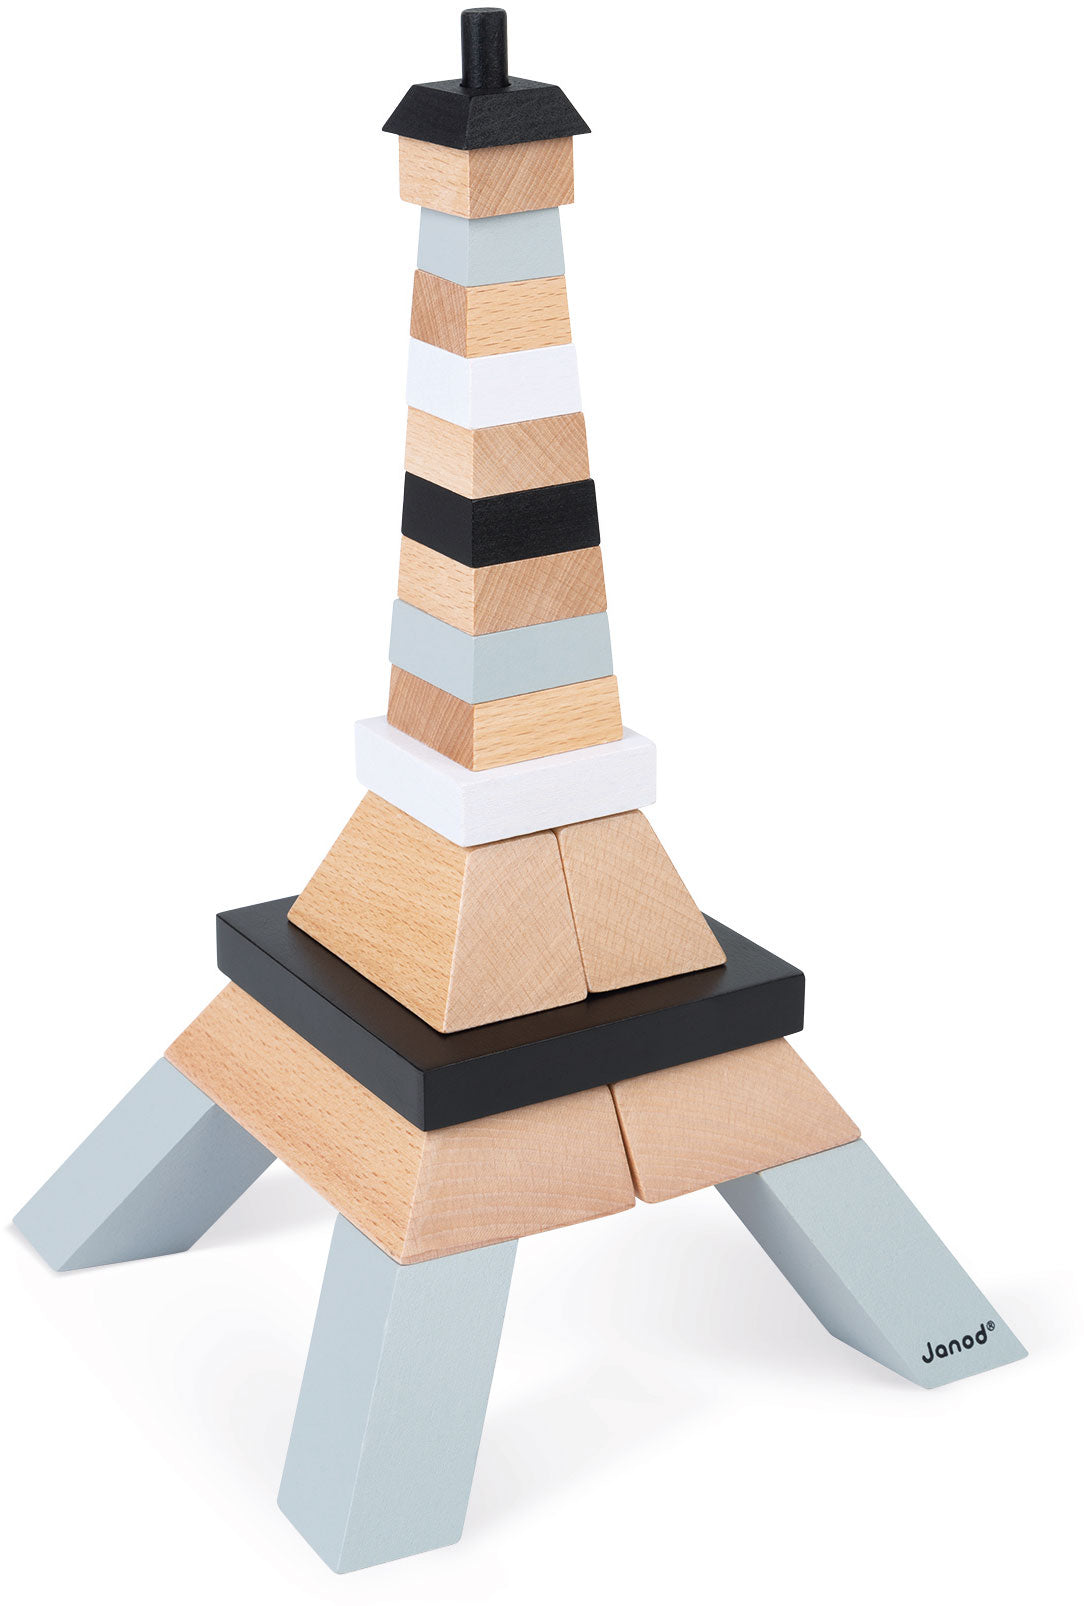 Eiffel Tower Building Set - Janod